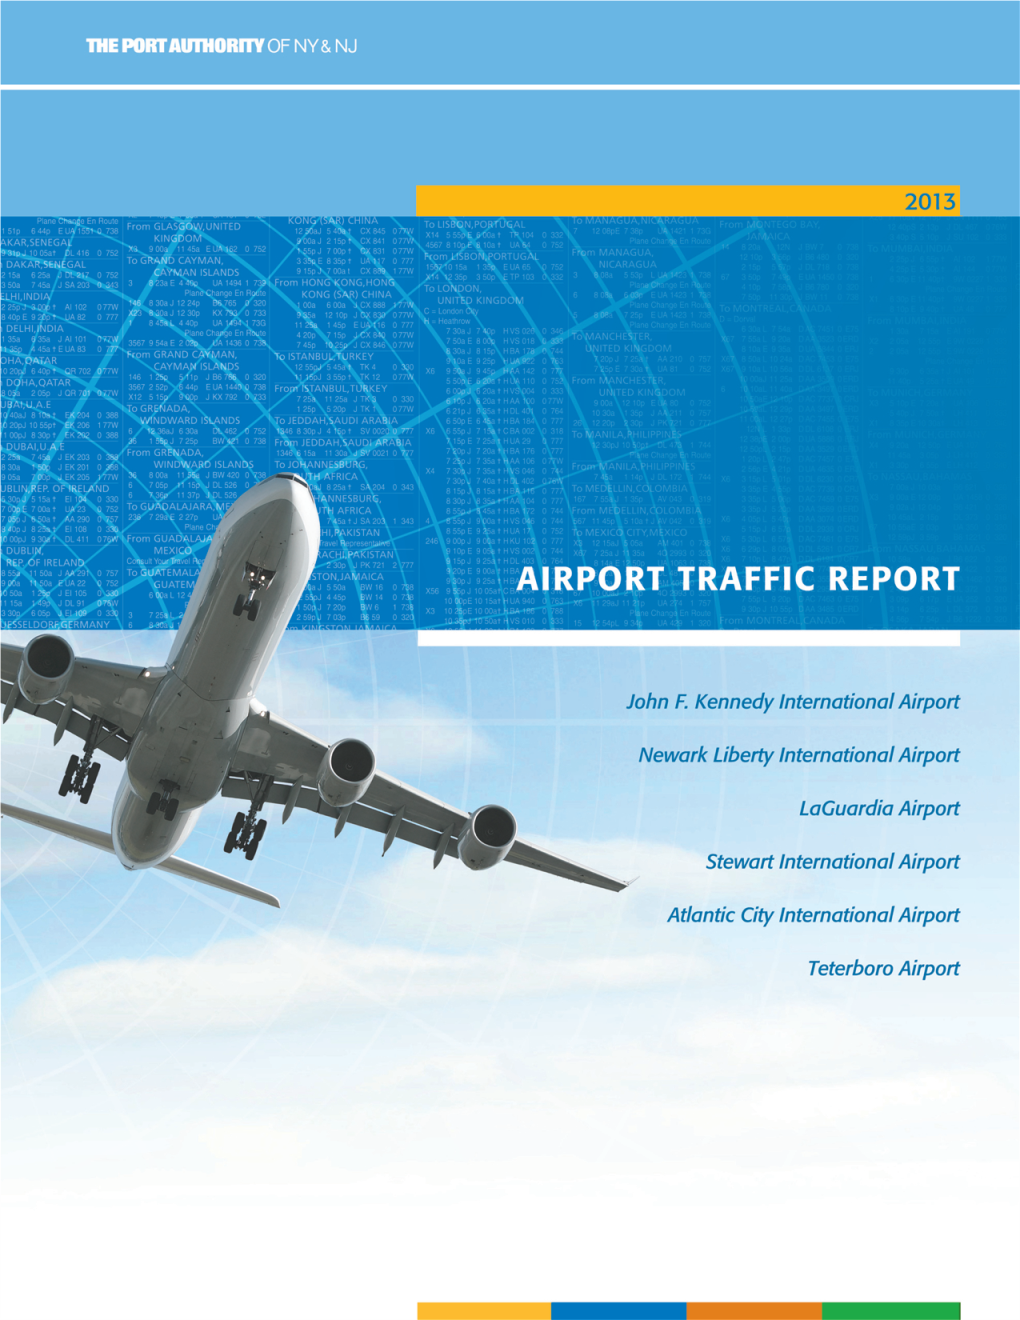 2013 Annual Airport Traffic Report